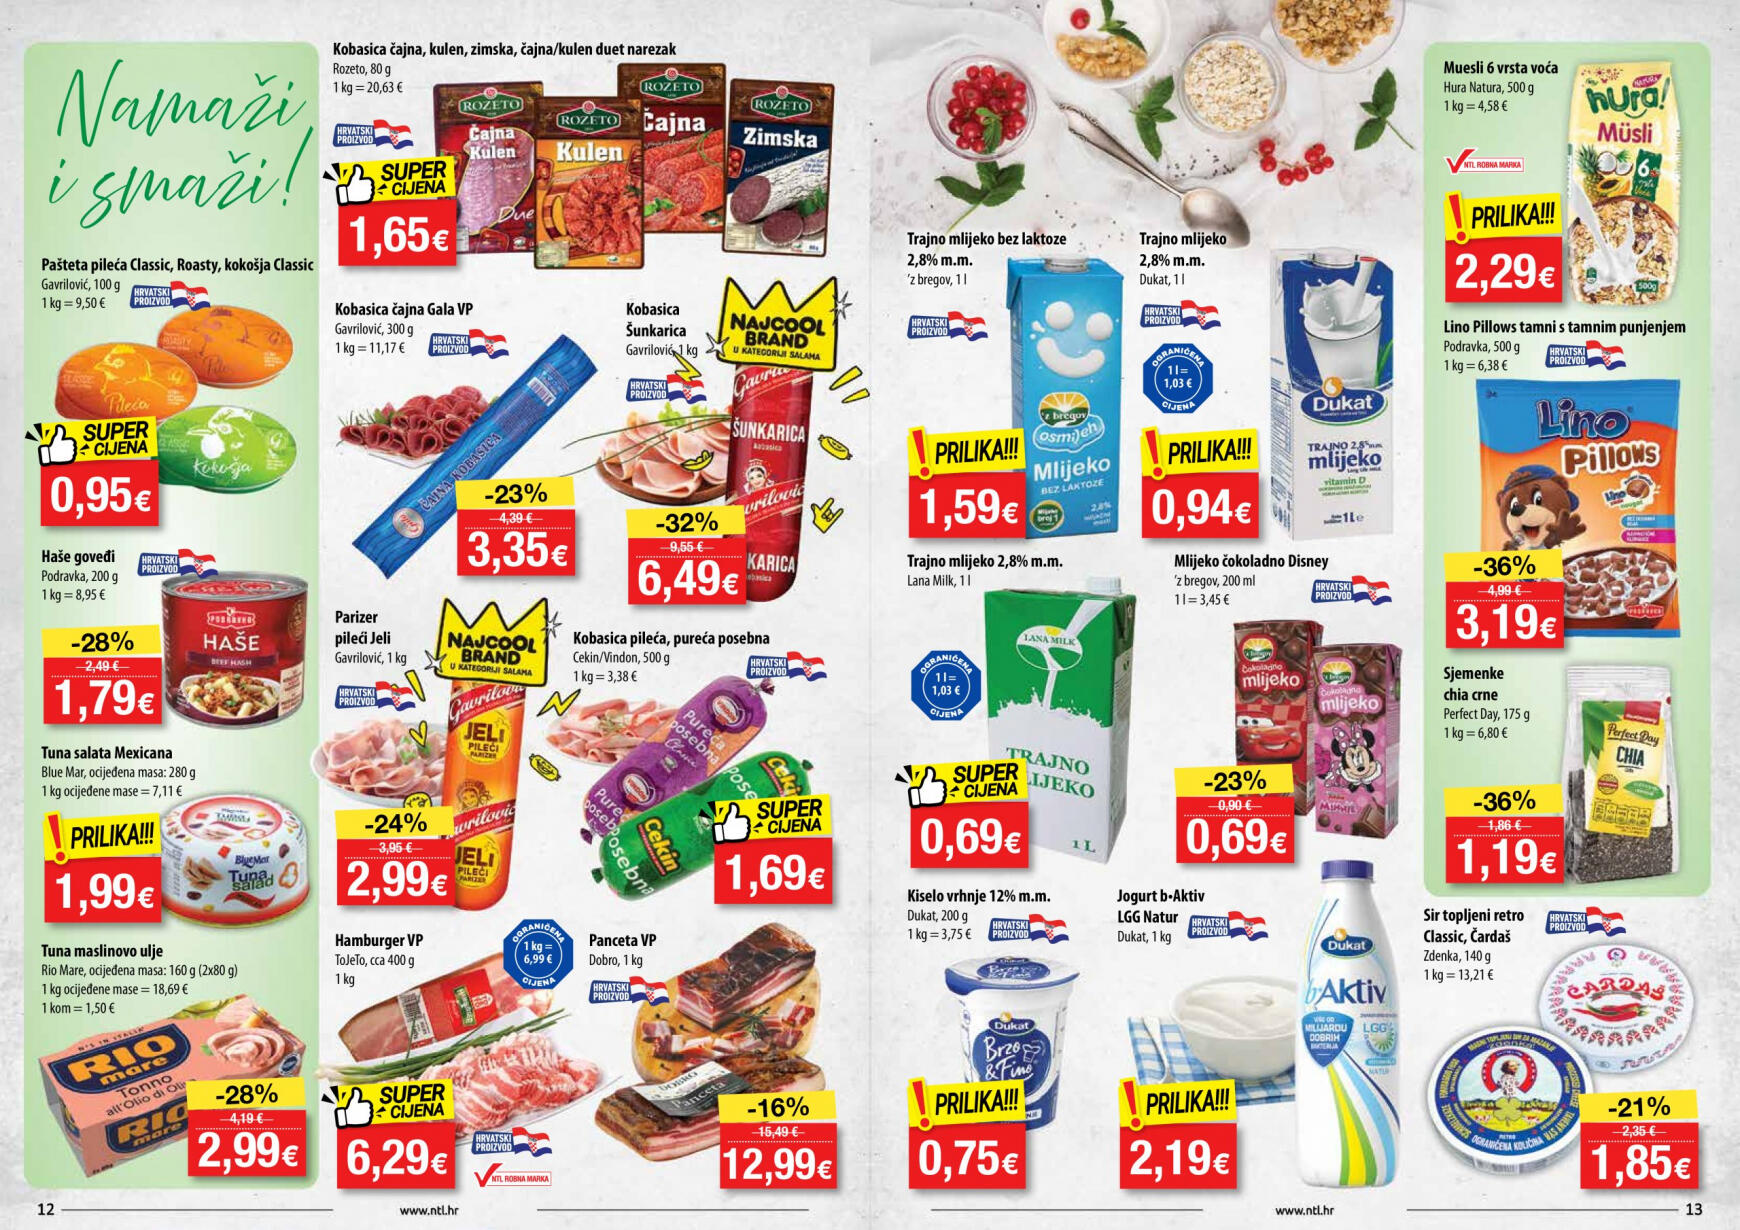 ntl - Novi katalog NTL - Supermarketi Soblinec, Krapina, Duga Resa 24.04. - 30.04. - page: 7